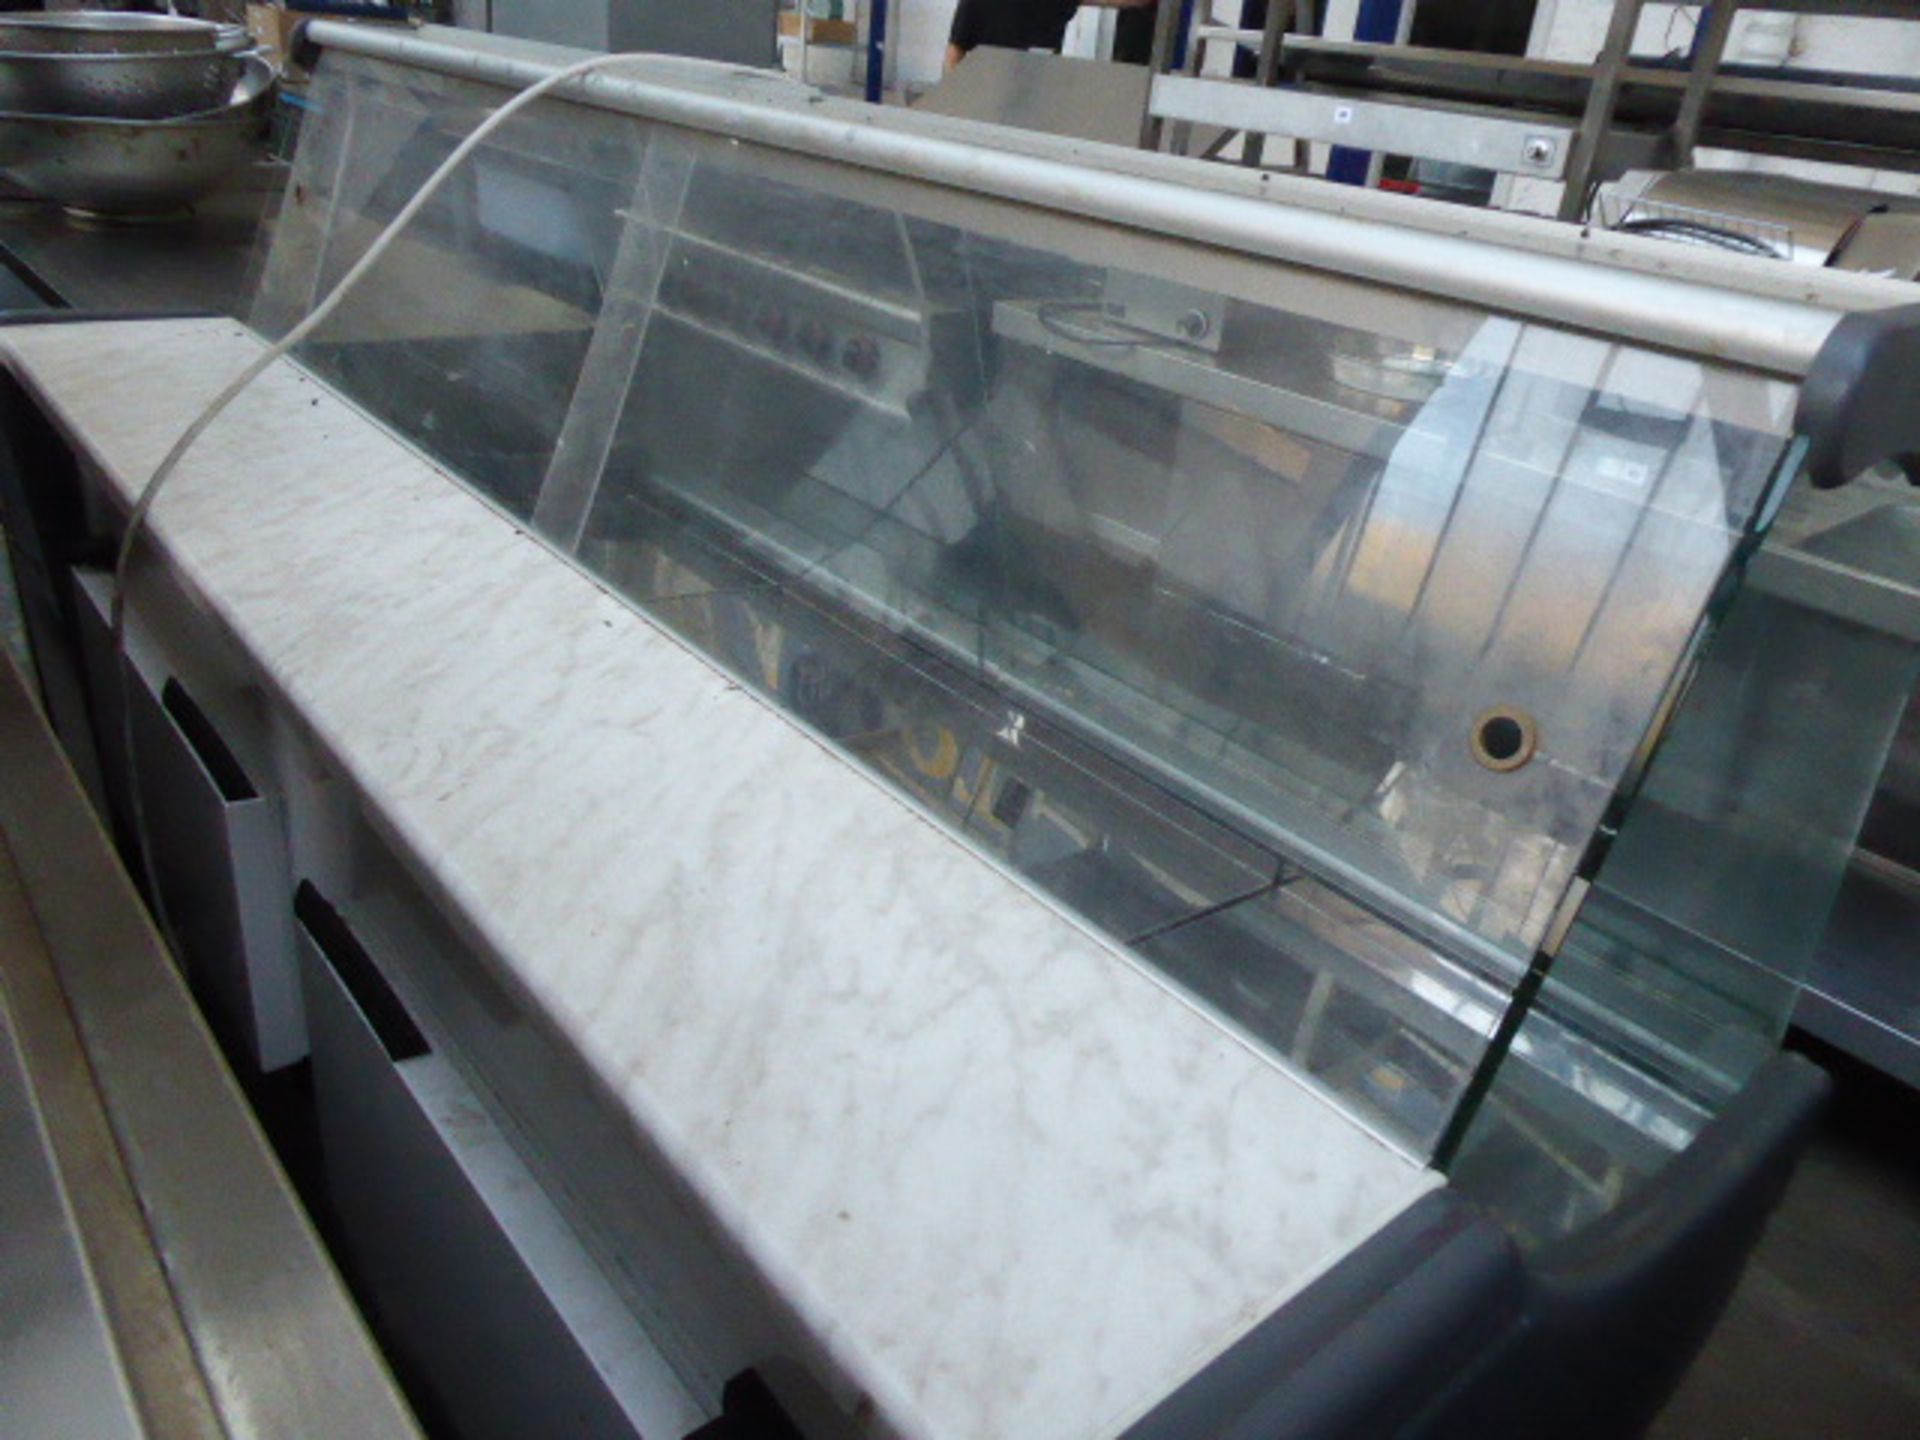 (102) 175cm refrigerated deli type serve over counter fridge - Image 3 of 3